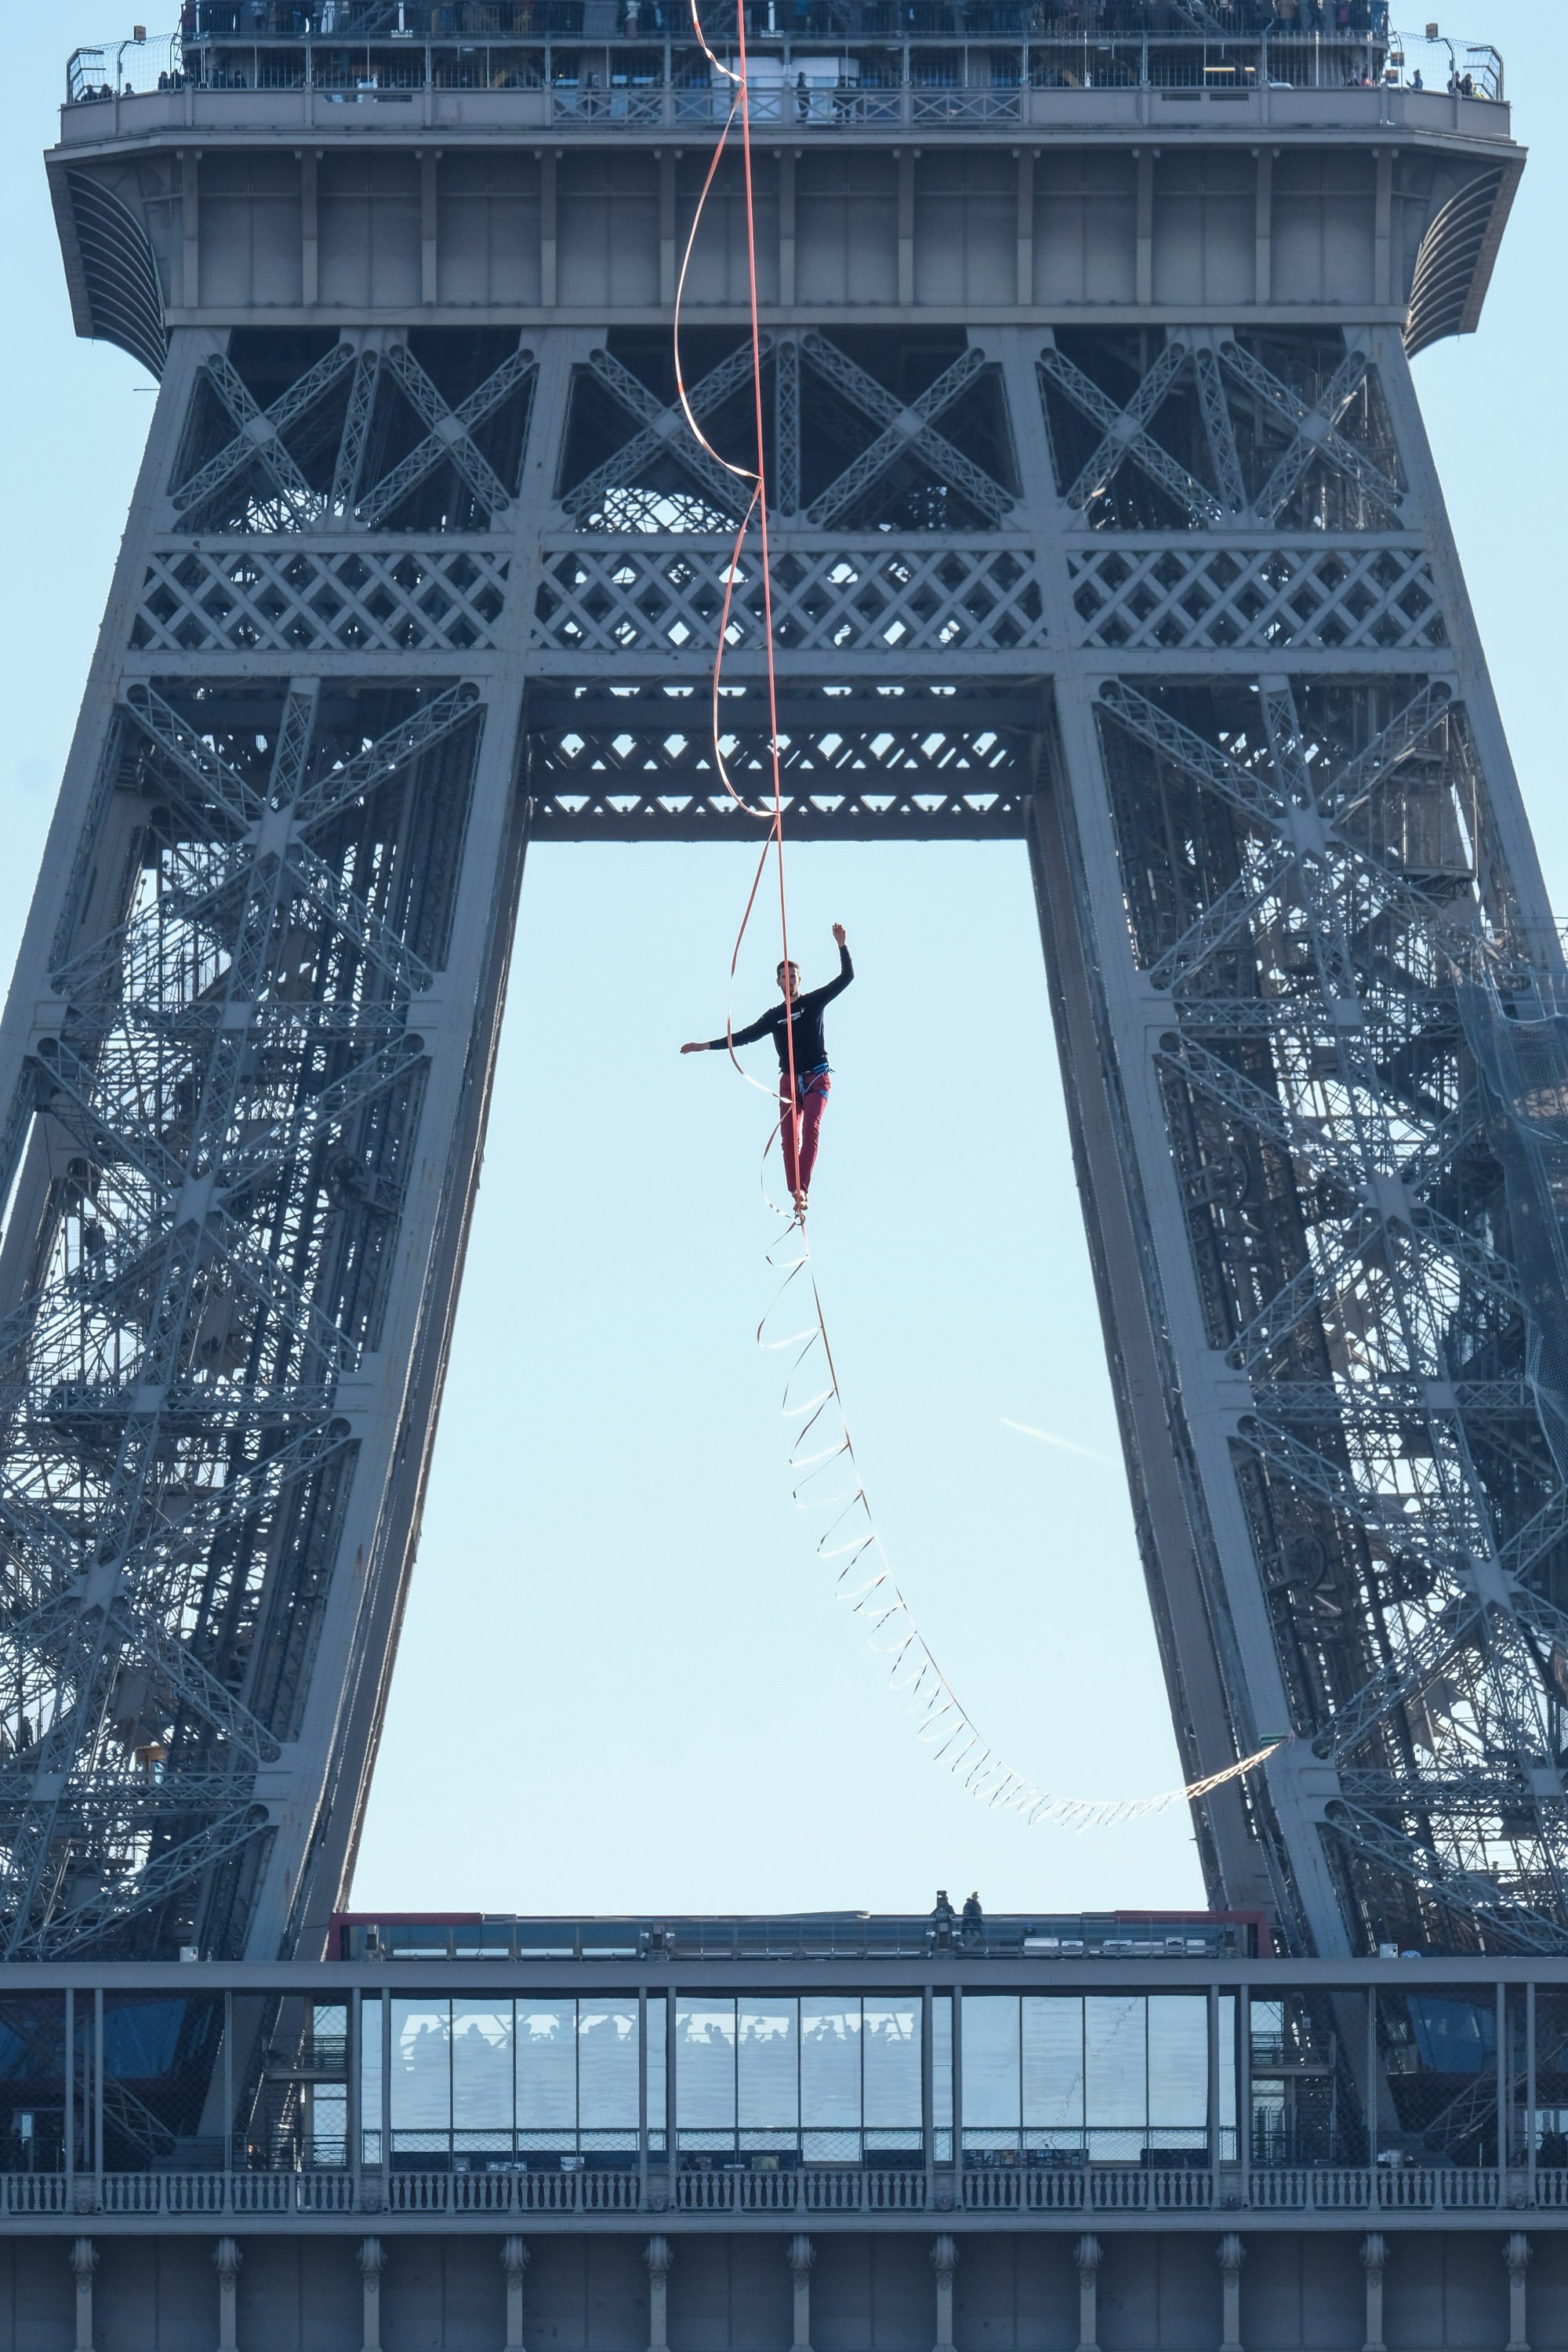 France - Extreme sports - Slackline - world recorld in Paris for